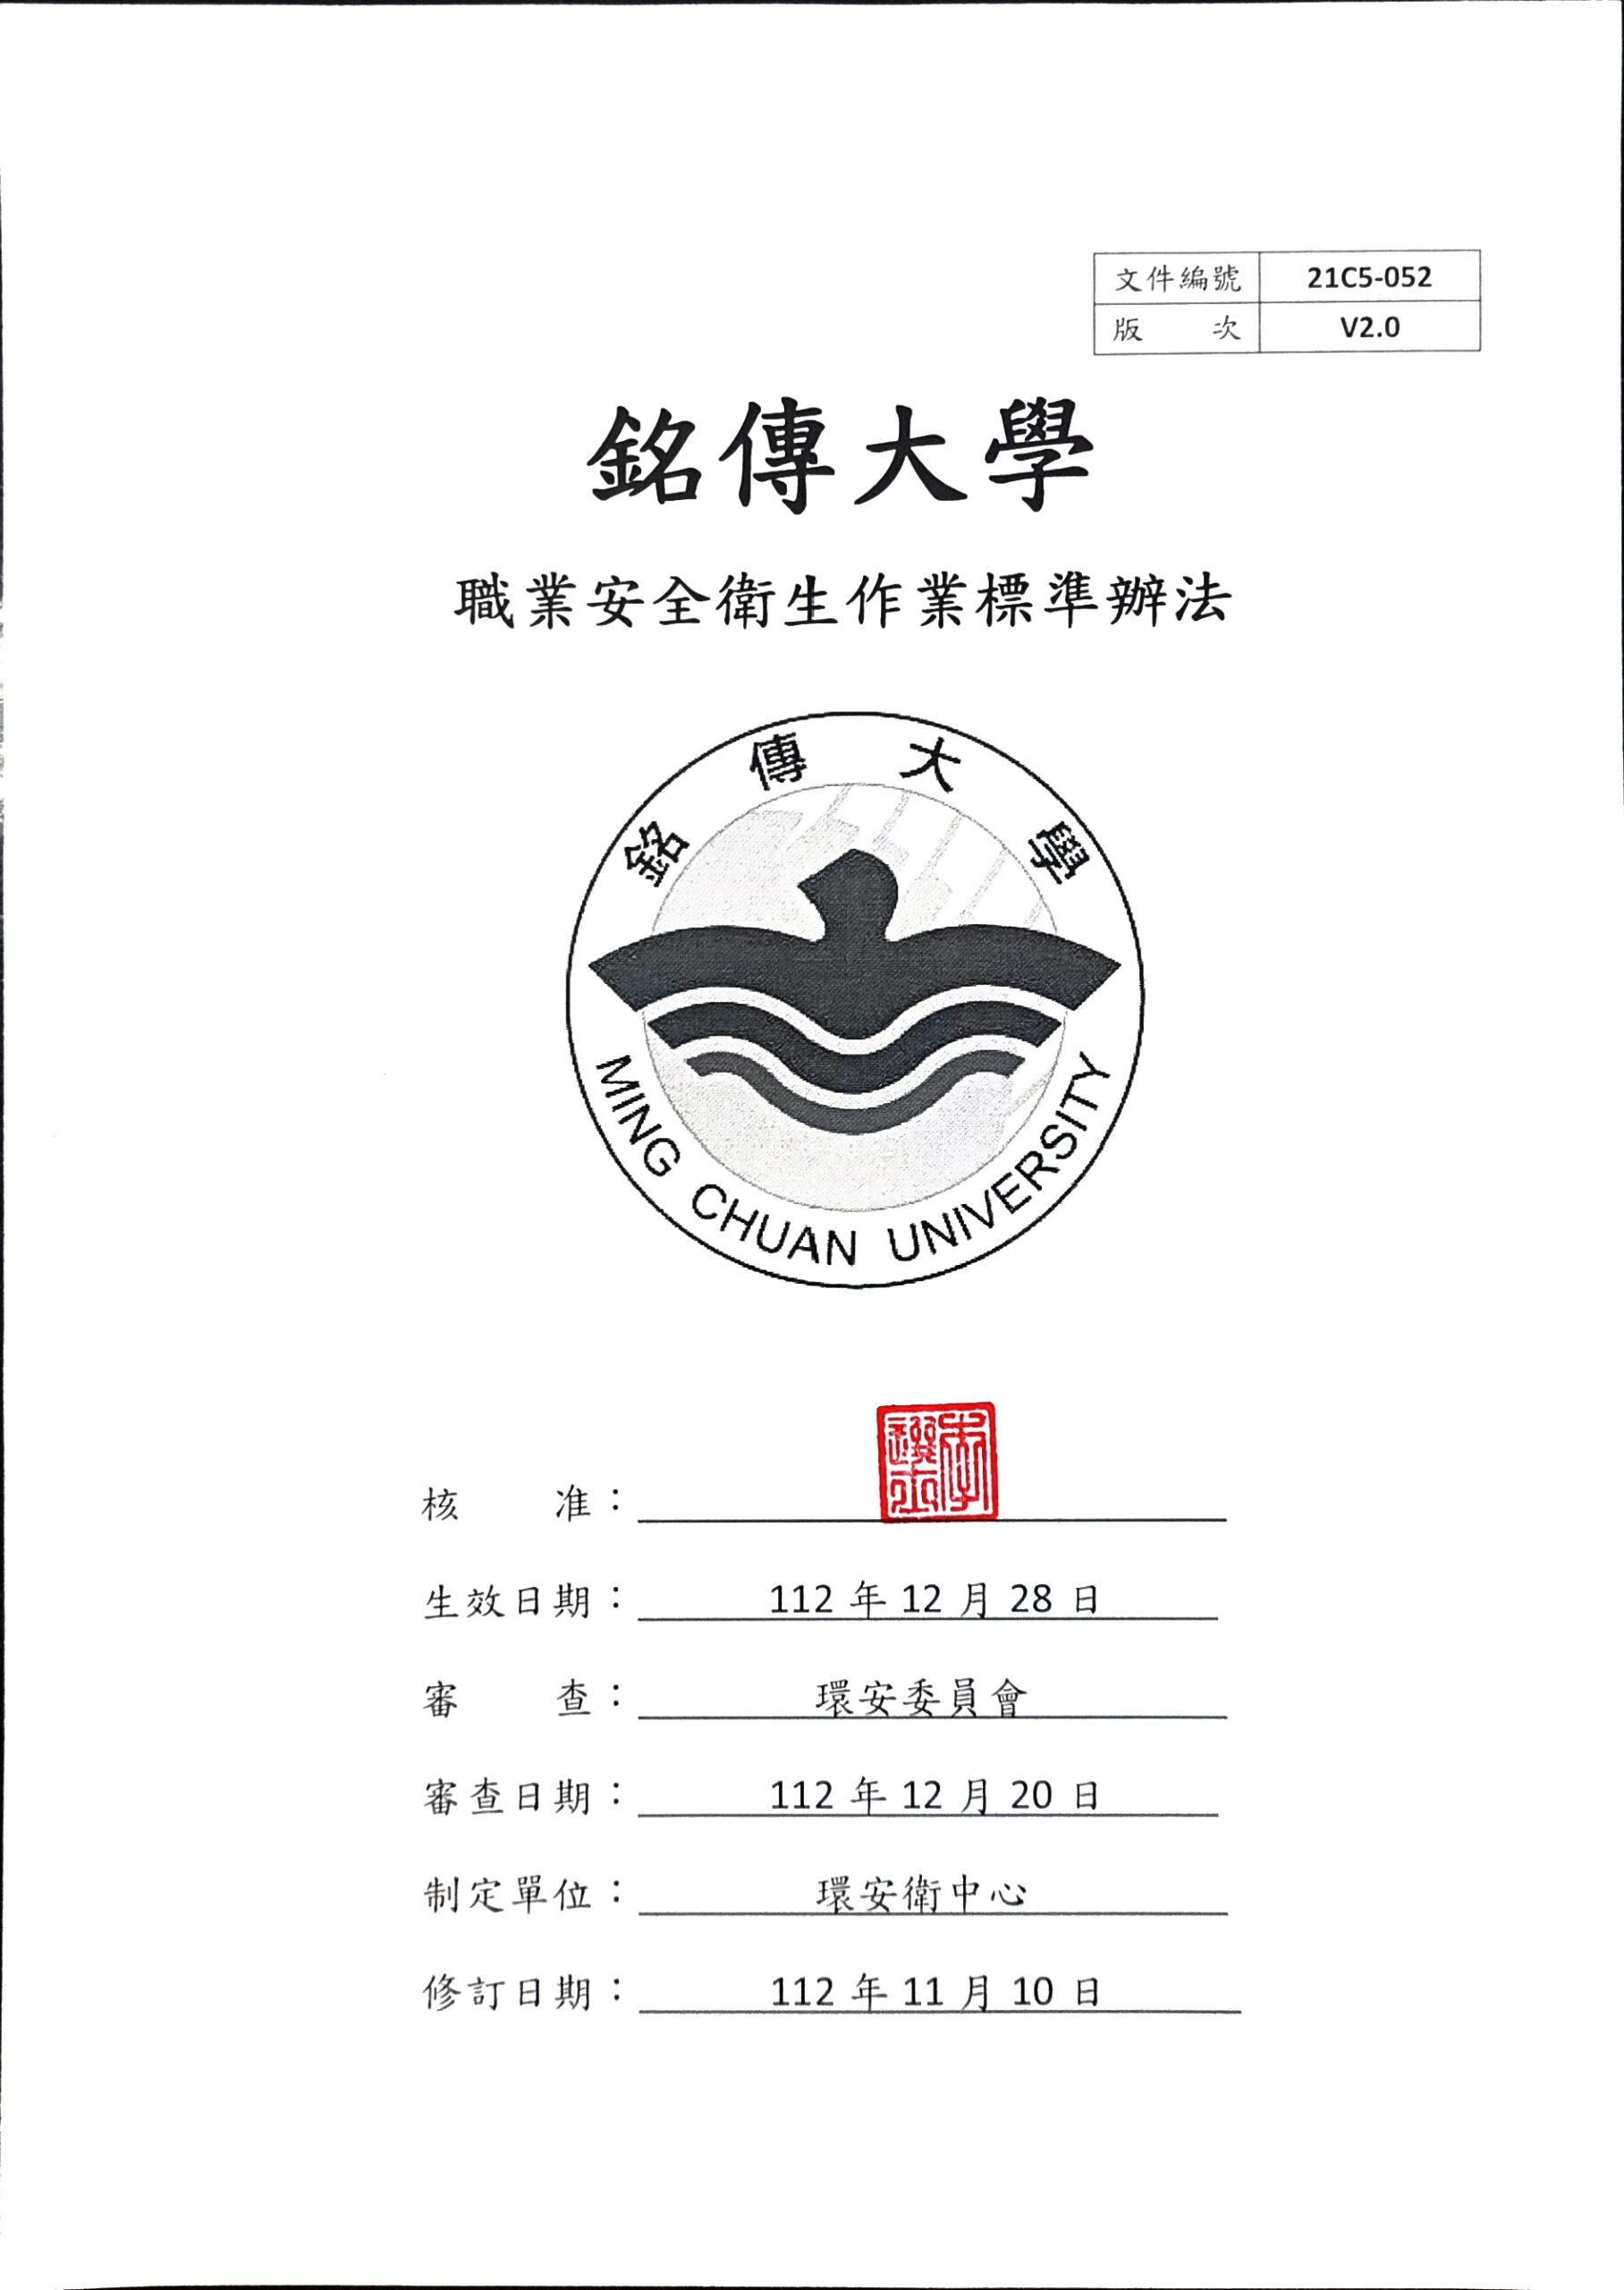 Featured image for “銘傳大學 職業安全衛生作業標準辦法已於112年12月28日校長核定公佈實施”